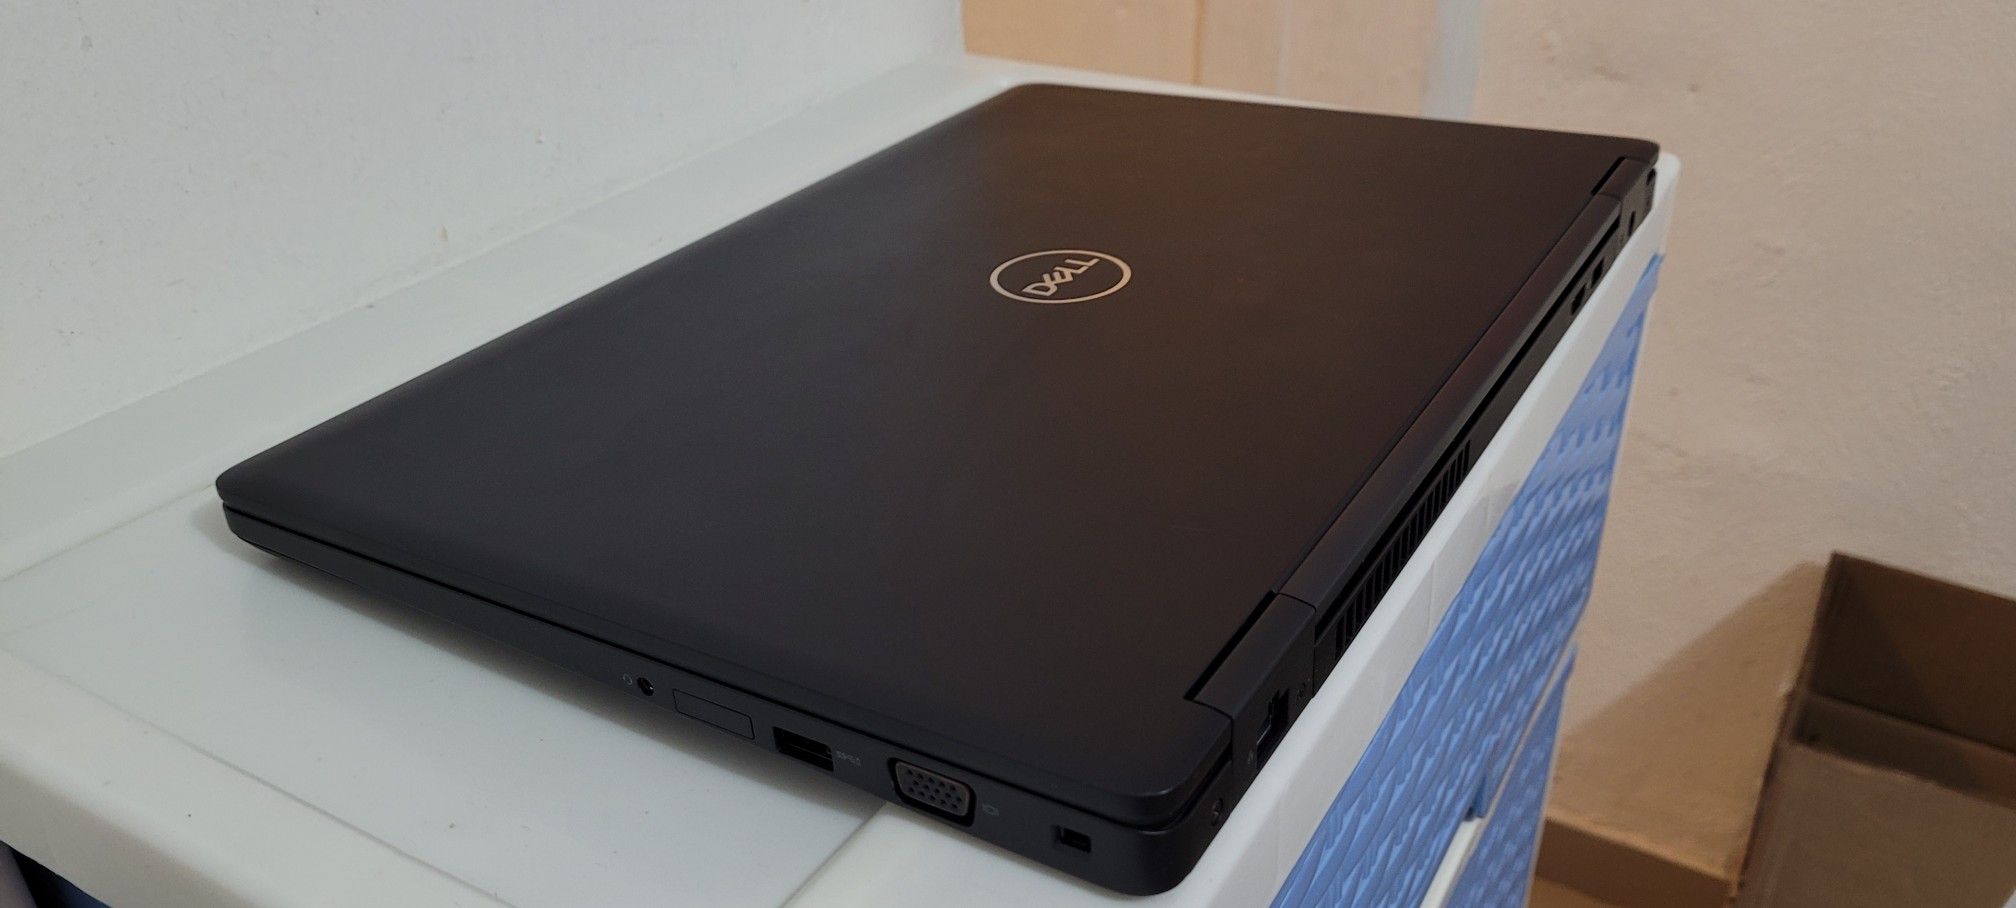 computadoras y laptops - Dell 5550 17 Pulg Core i7 Ram 12gb Disco 128gb SSD Wifi y Bluetoth 2